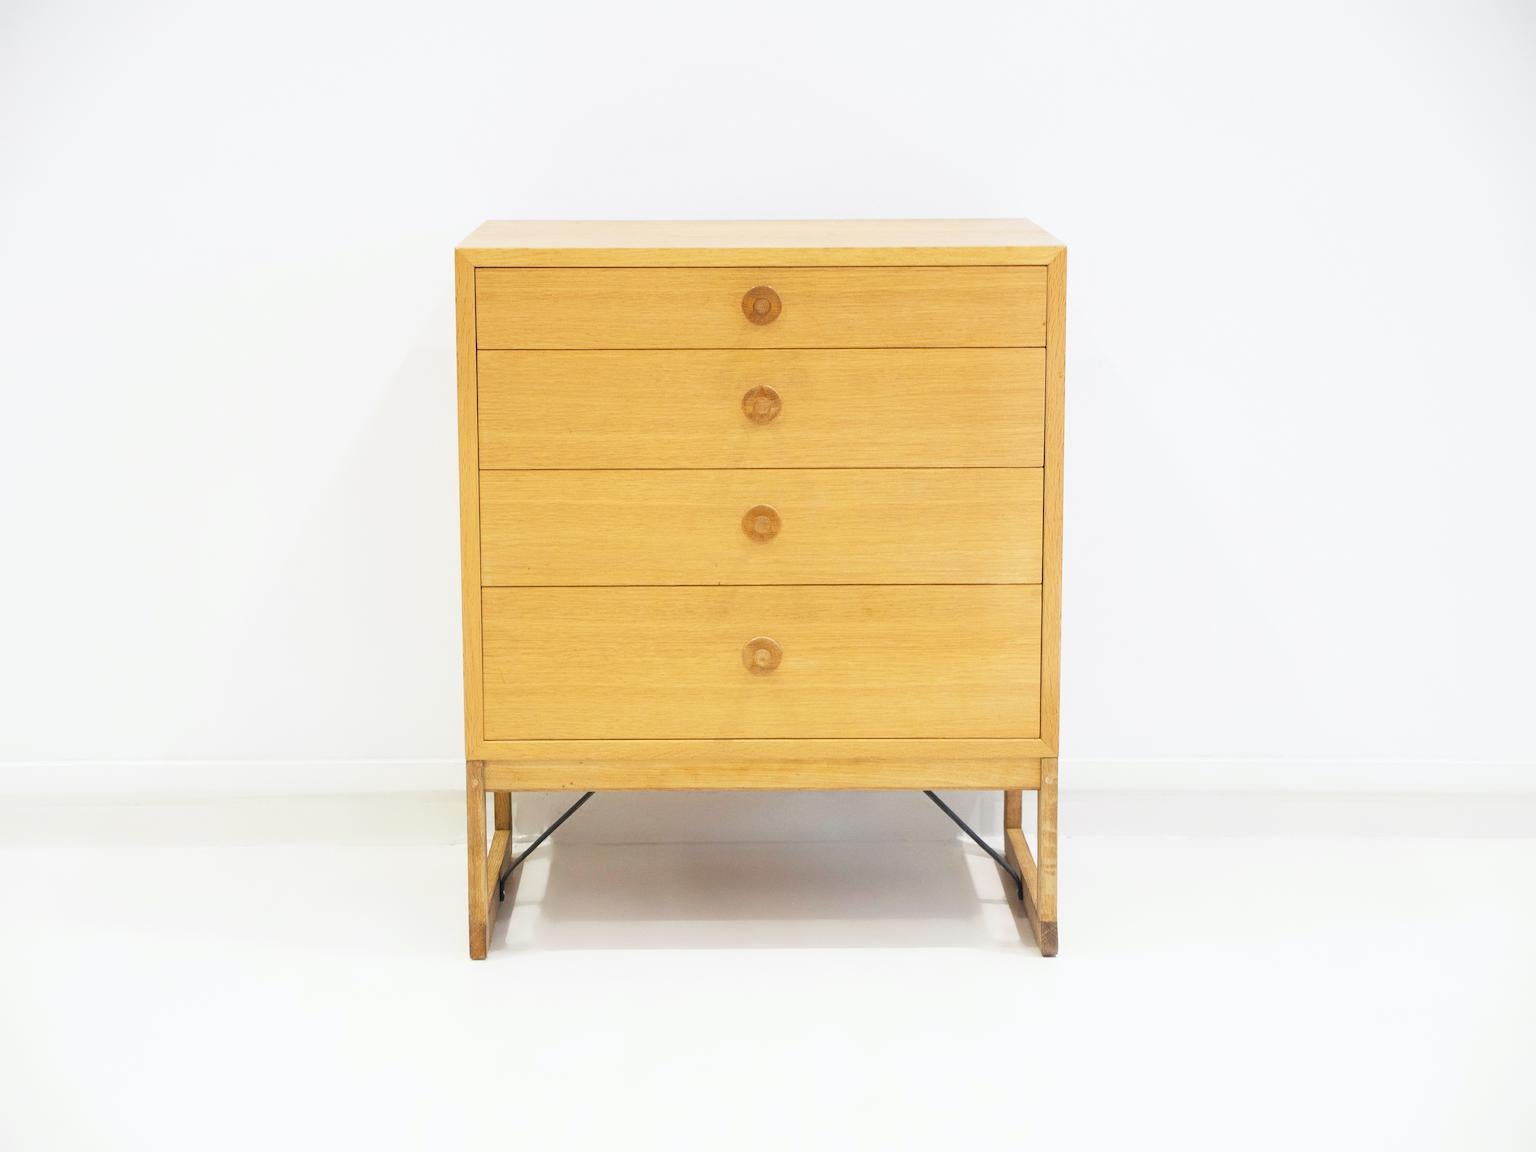 Oak commode, model “Øresund,” designed by Børge Mogensen. Front with four drawers of different sizes. Manufactured by Karl Andersson & Söner in Sweden.